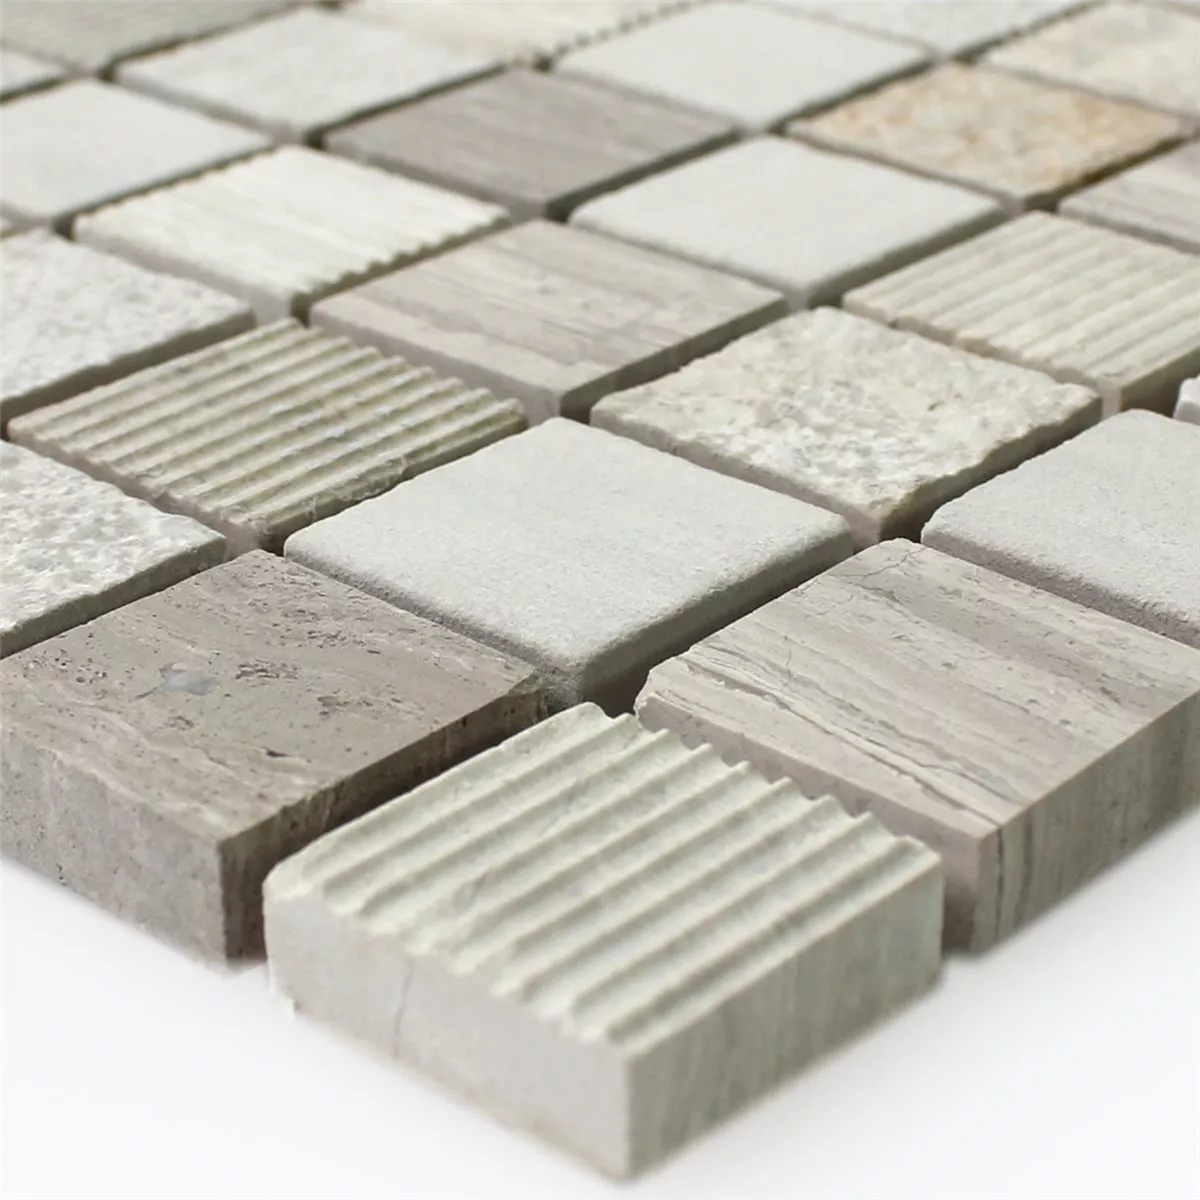 Sample Mosaic Tiles Natural Stone Macciato Beige Brown